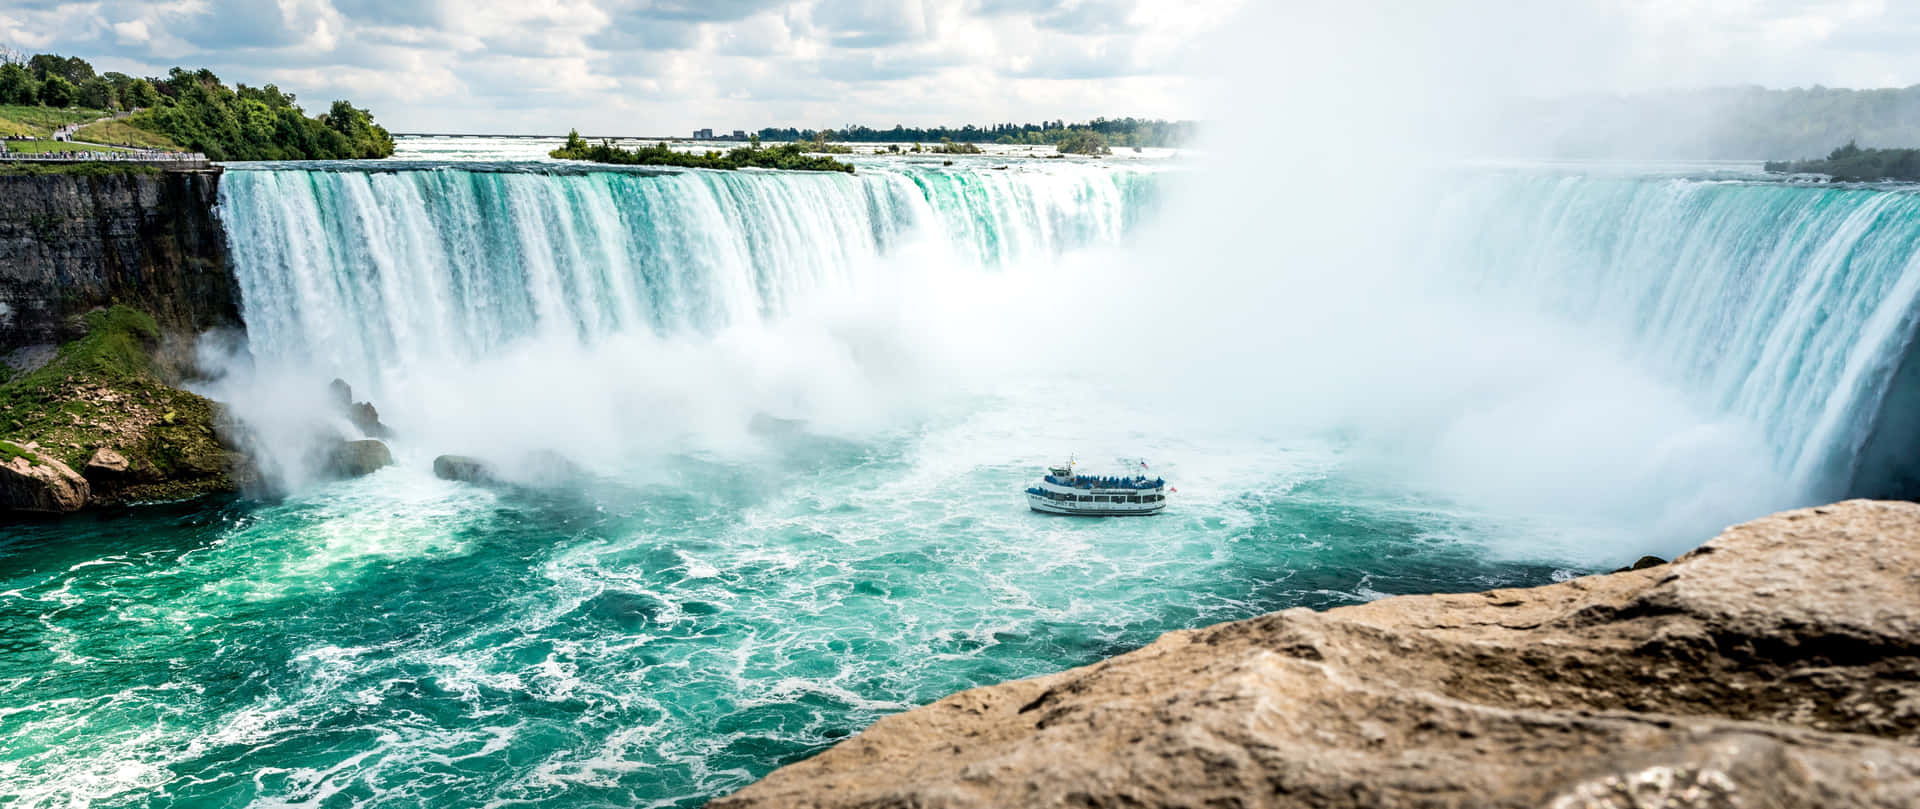 Niagara Falls 5888 X 2483 Wallpaper